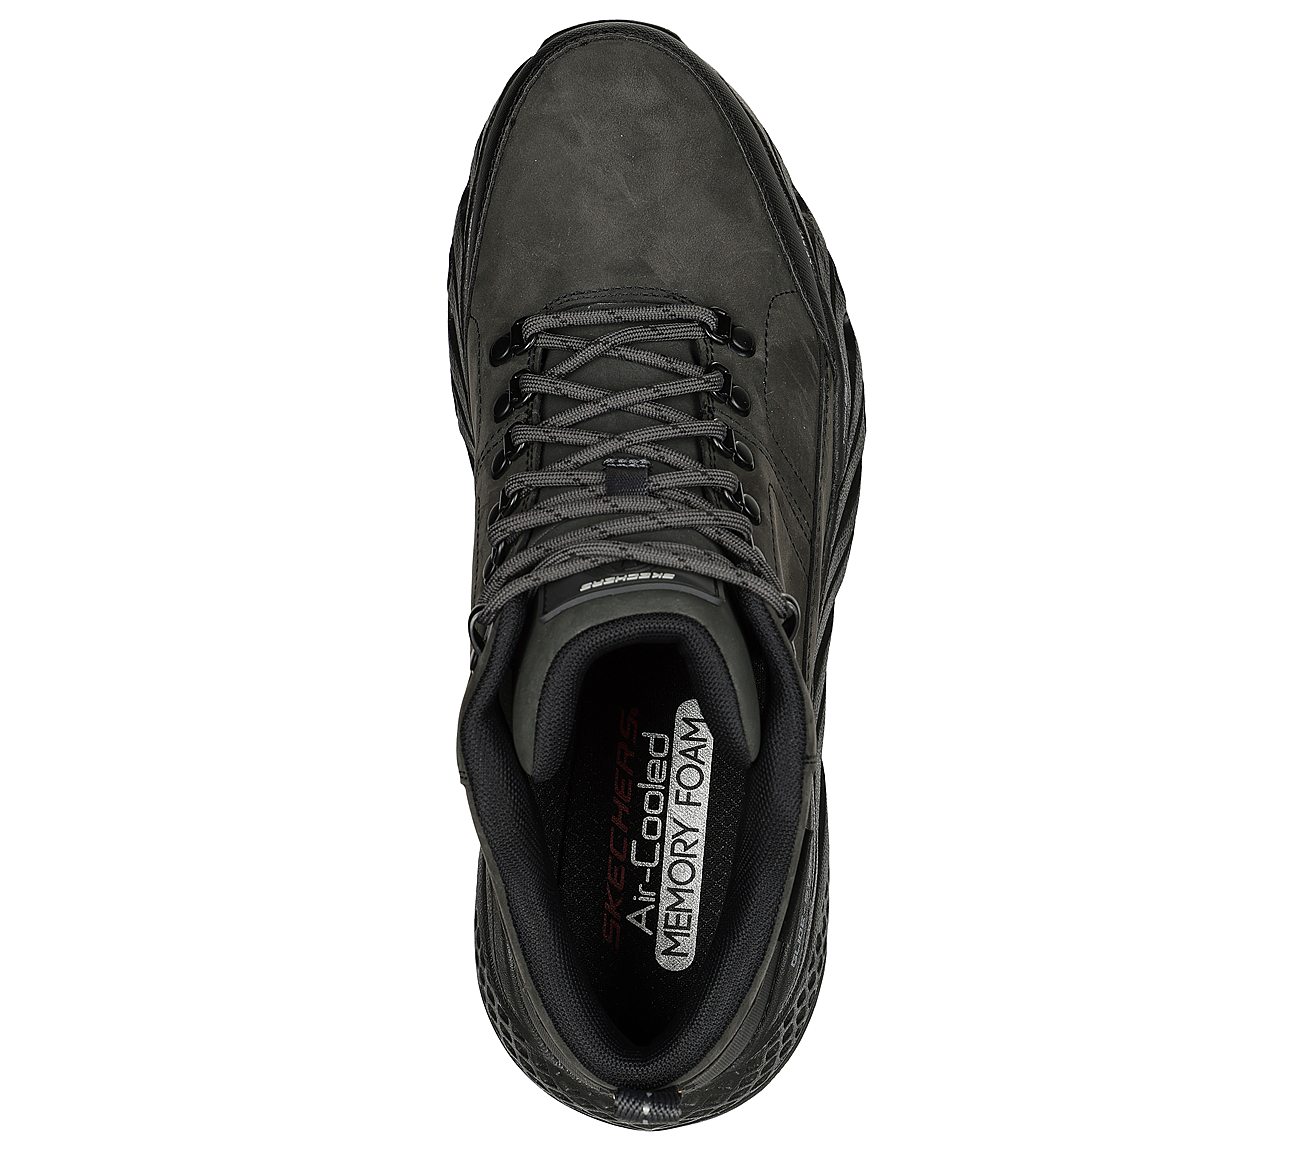 GLIDE-STEP TRAIL, CHARCOAL/BLACK Footwear Top View